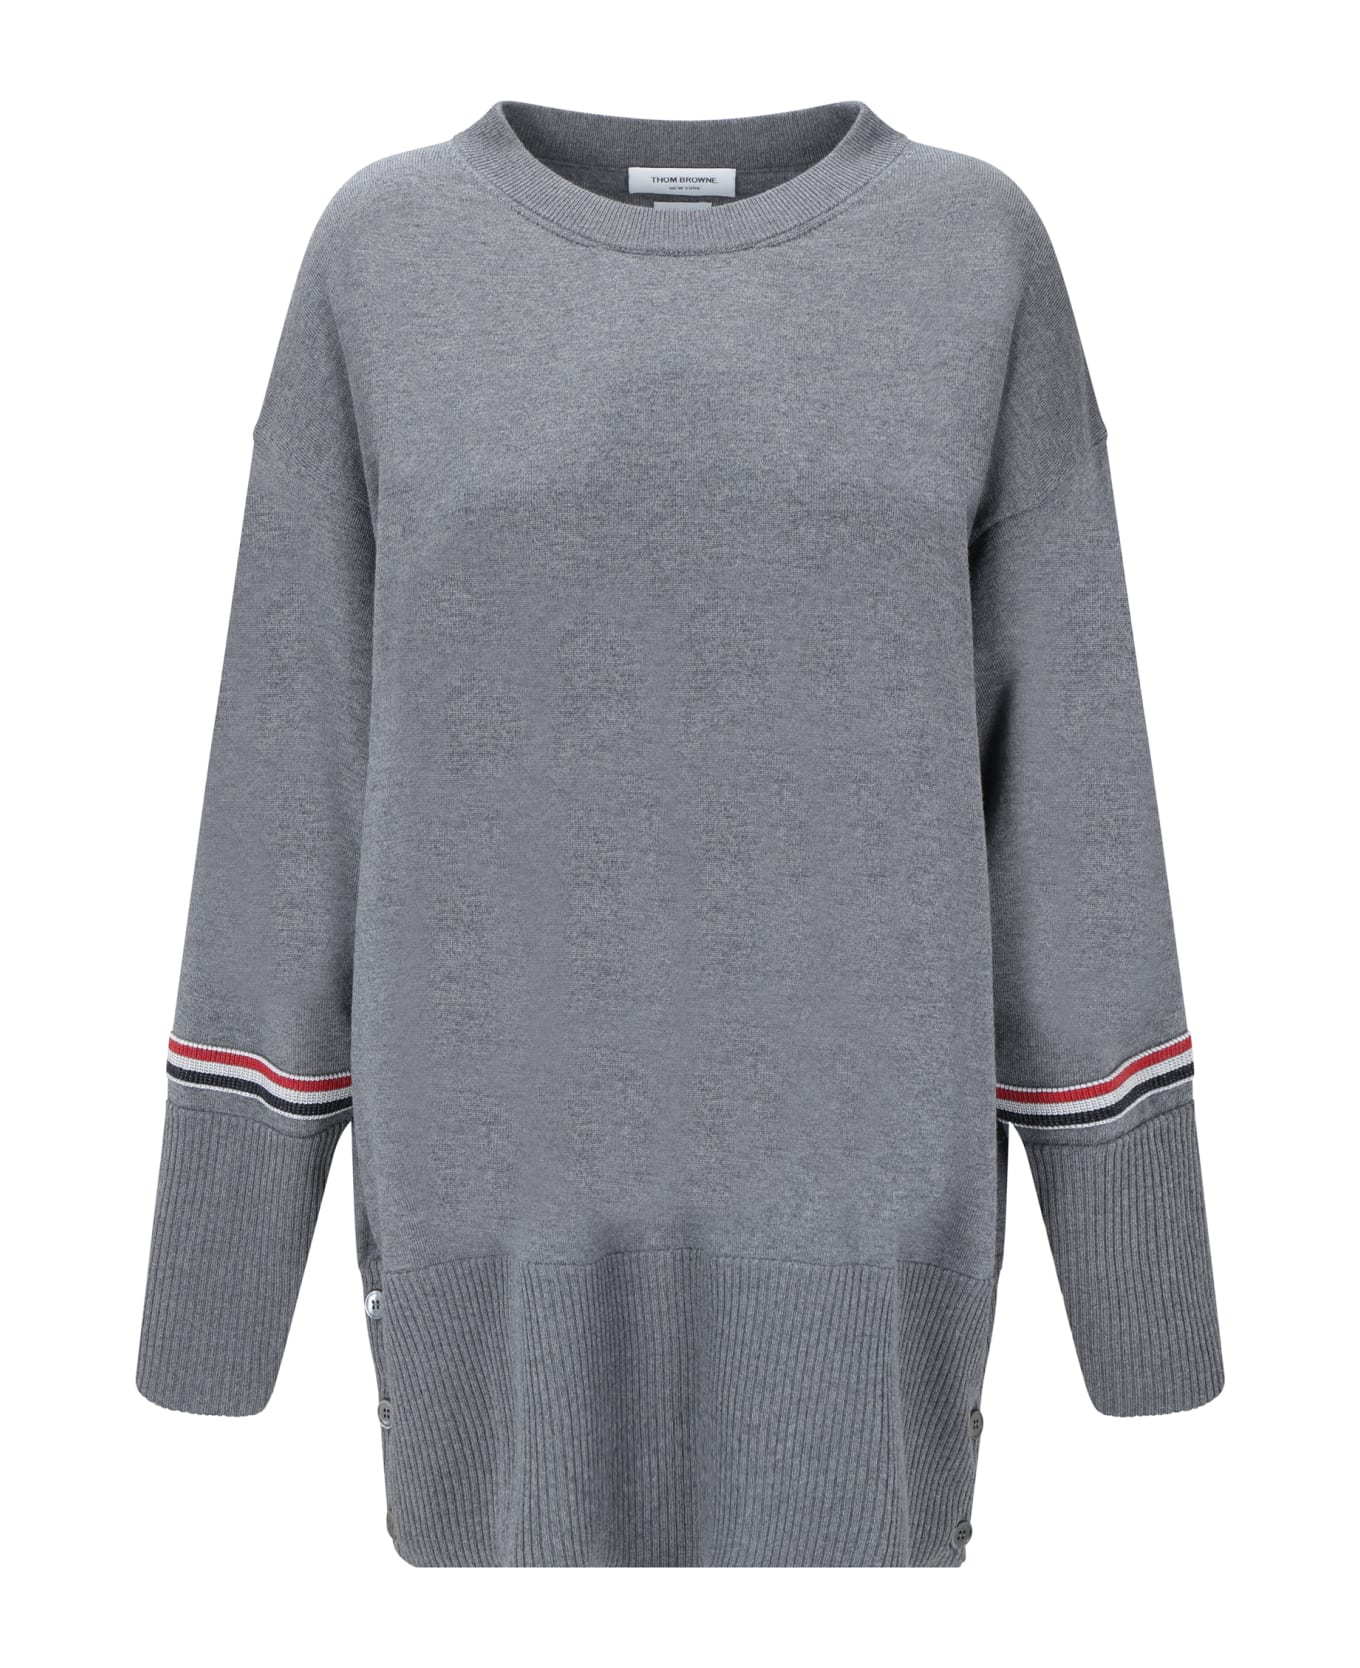 Thom Browne Sweater - Med Grey